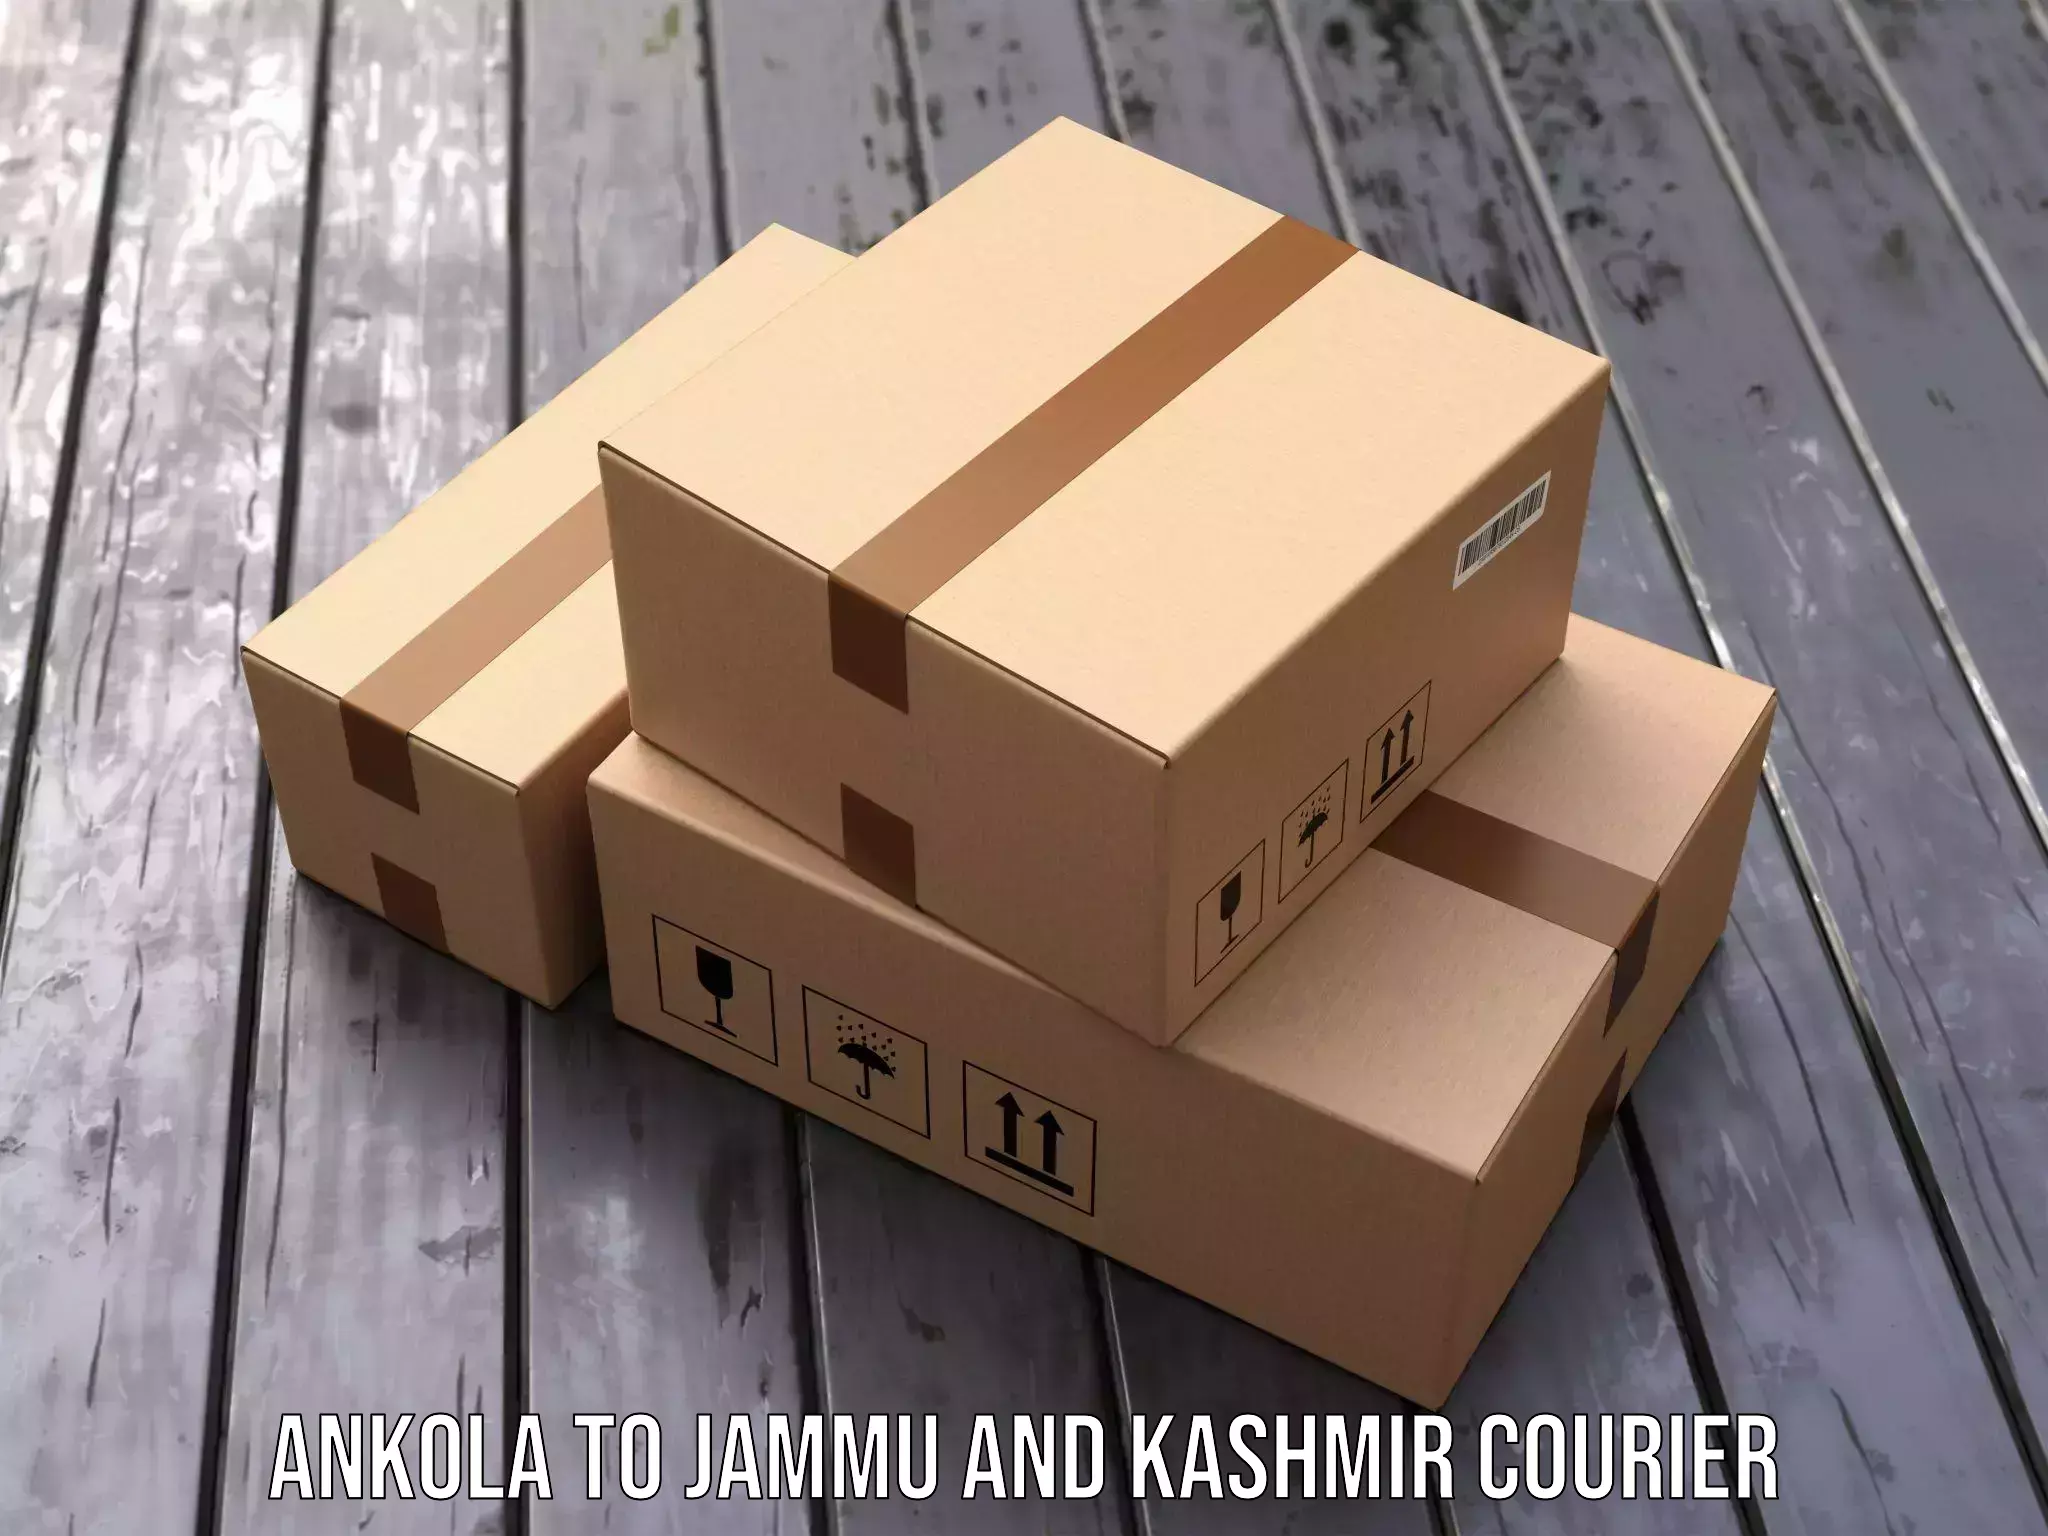 State-of-the-art courier technology Ankola to Rajouri